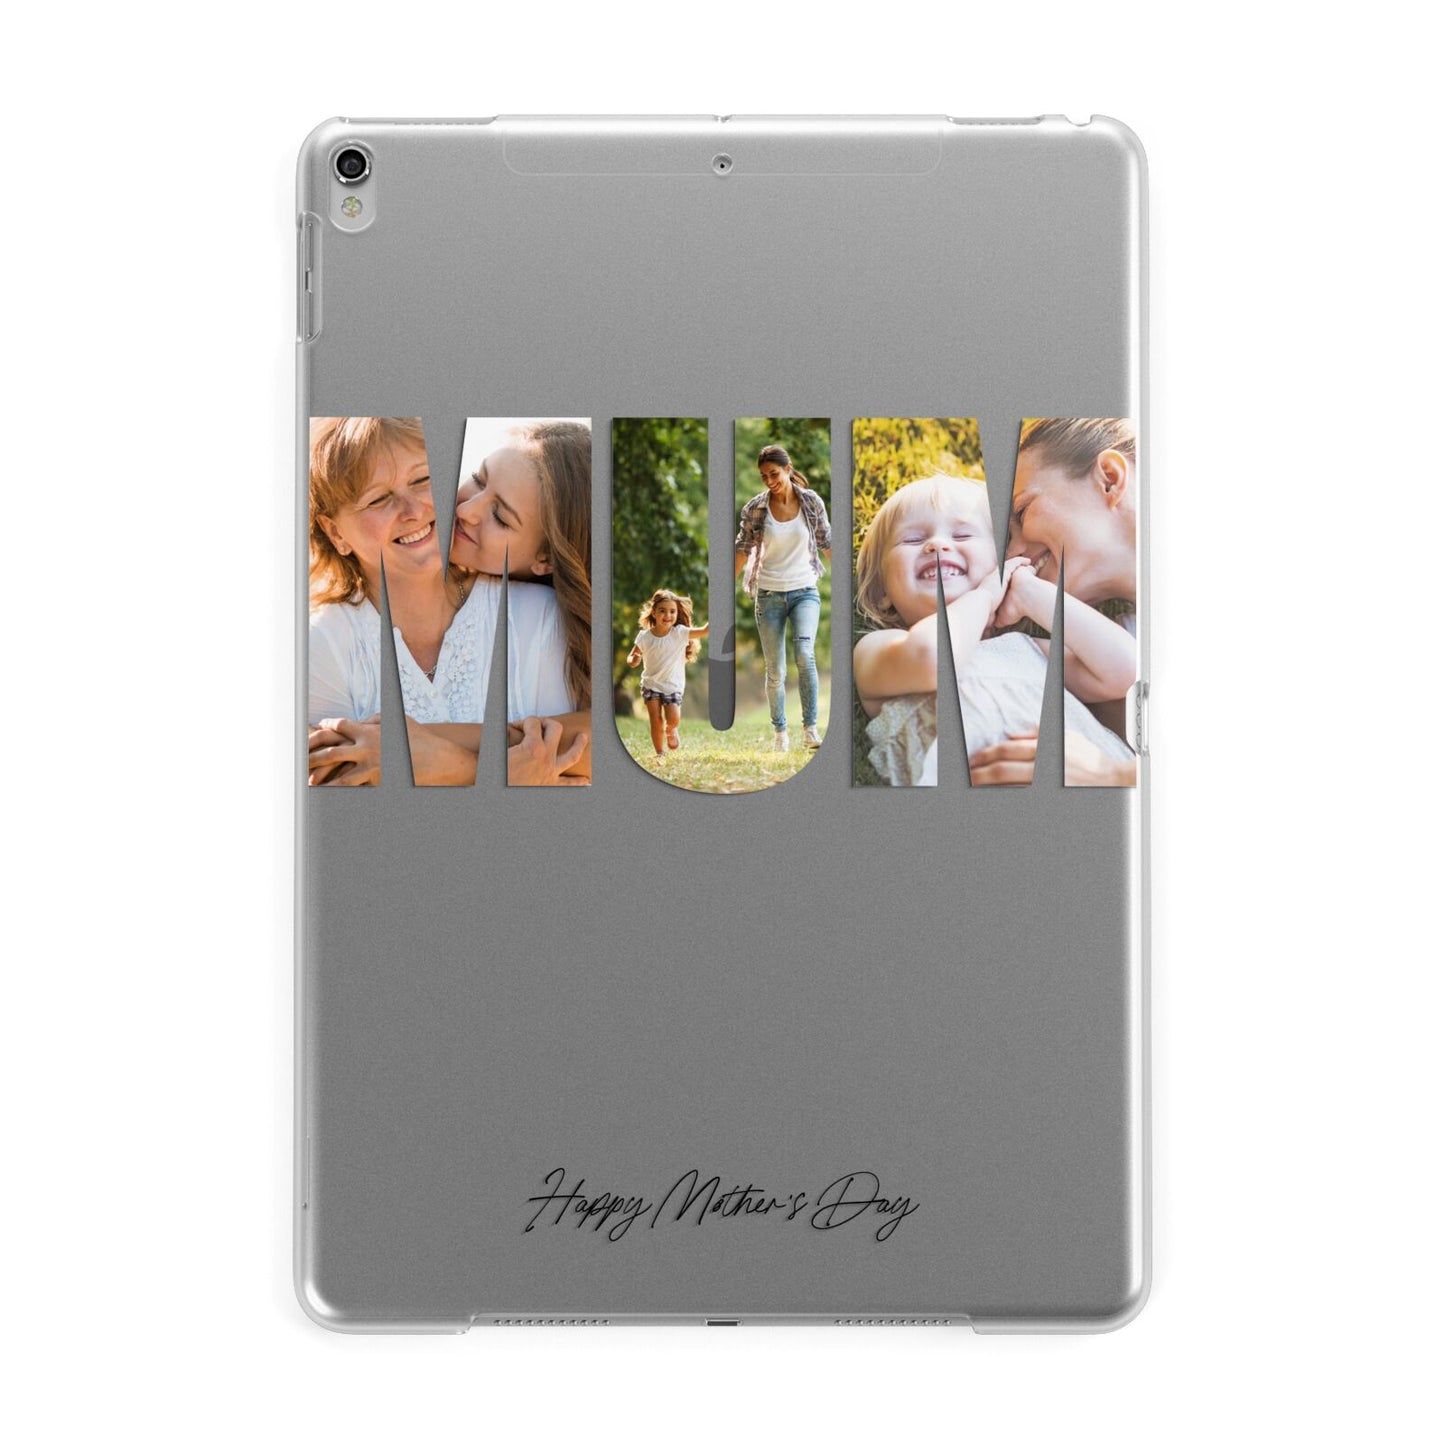 Mum Letters Photo Upload Apple iPad Silver Case